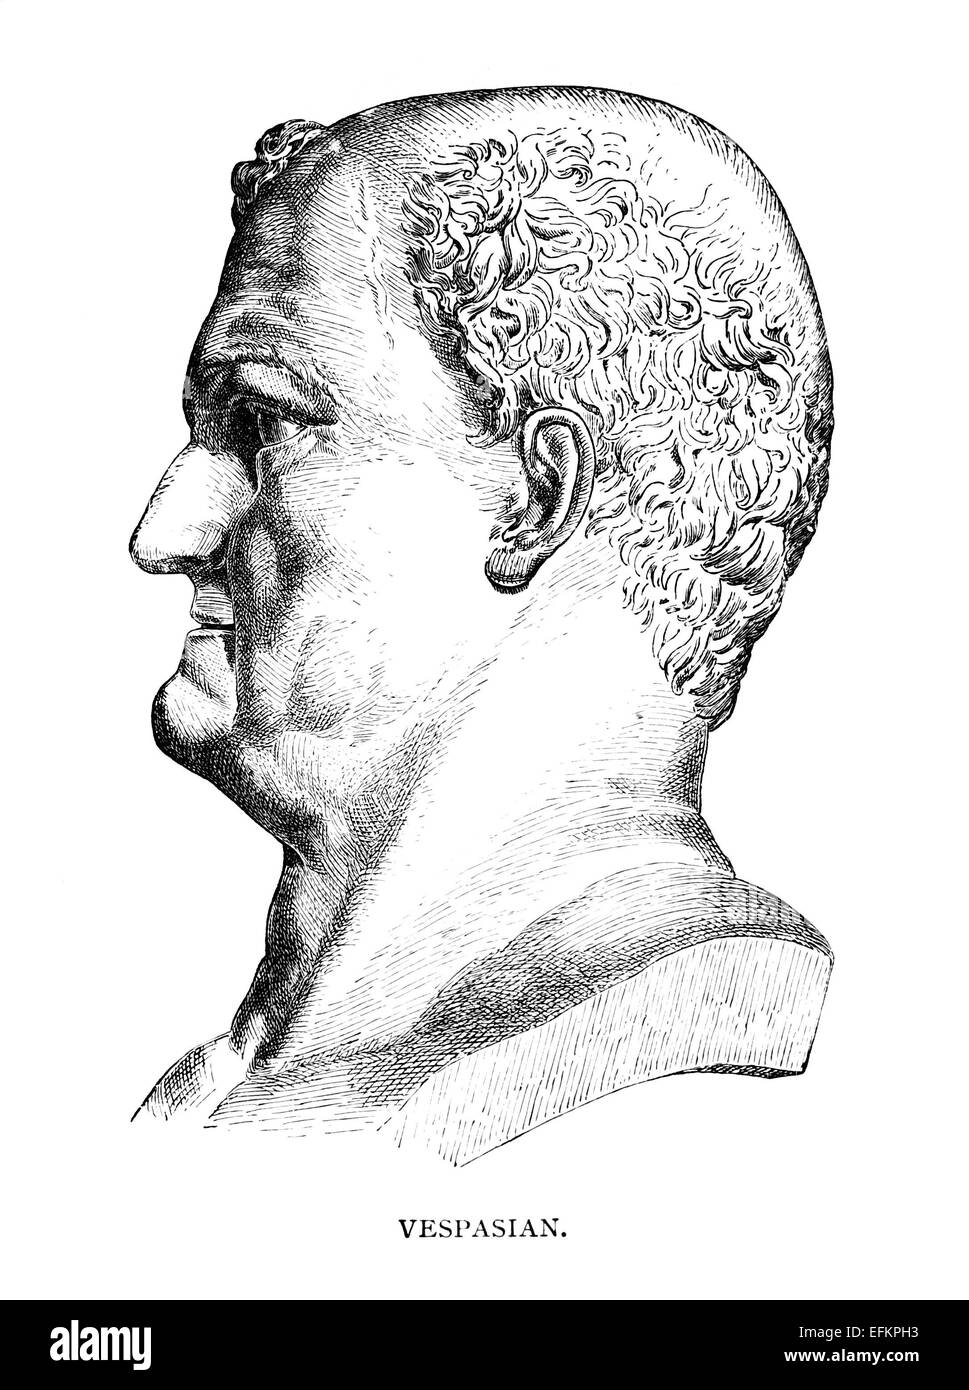 Victorian engraving of the Roman emperor Vespasian. Digitally restored image from a mid-19th century Encyclopaedia. Stock Photo